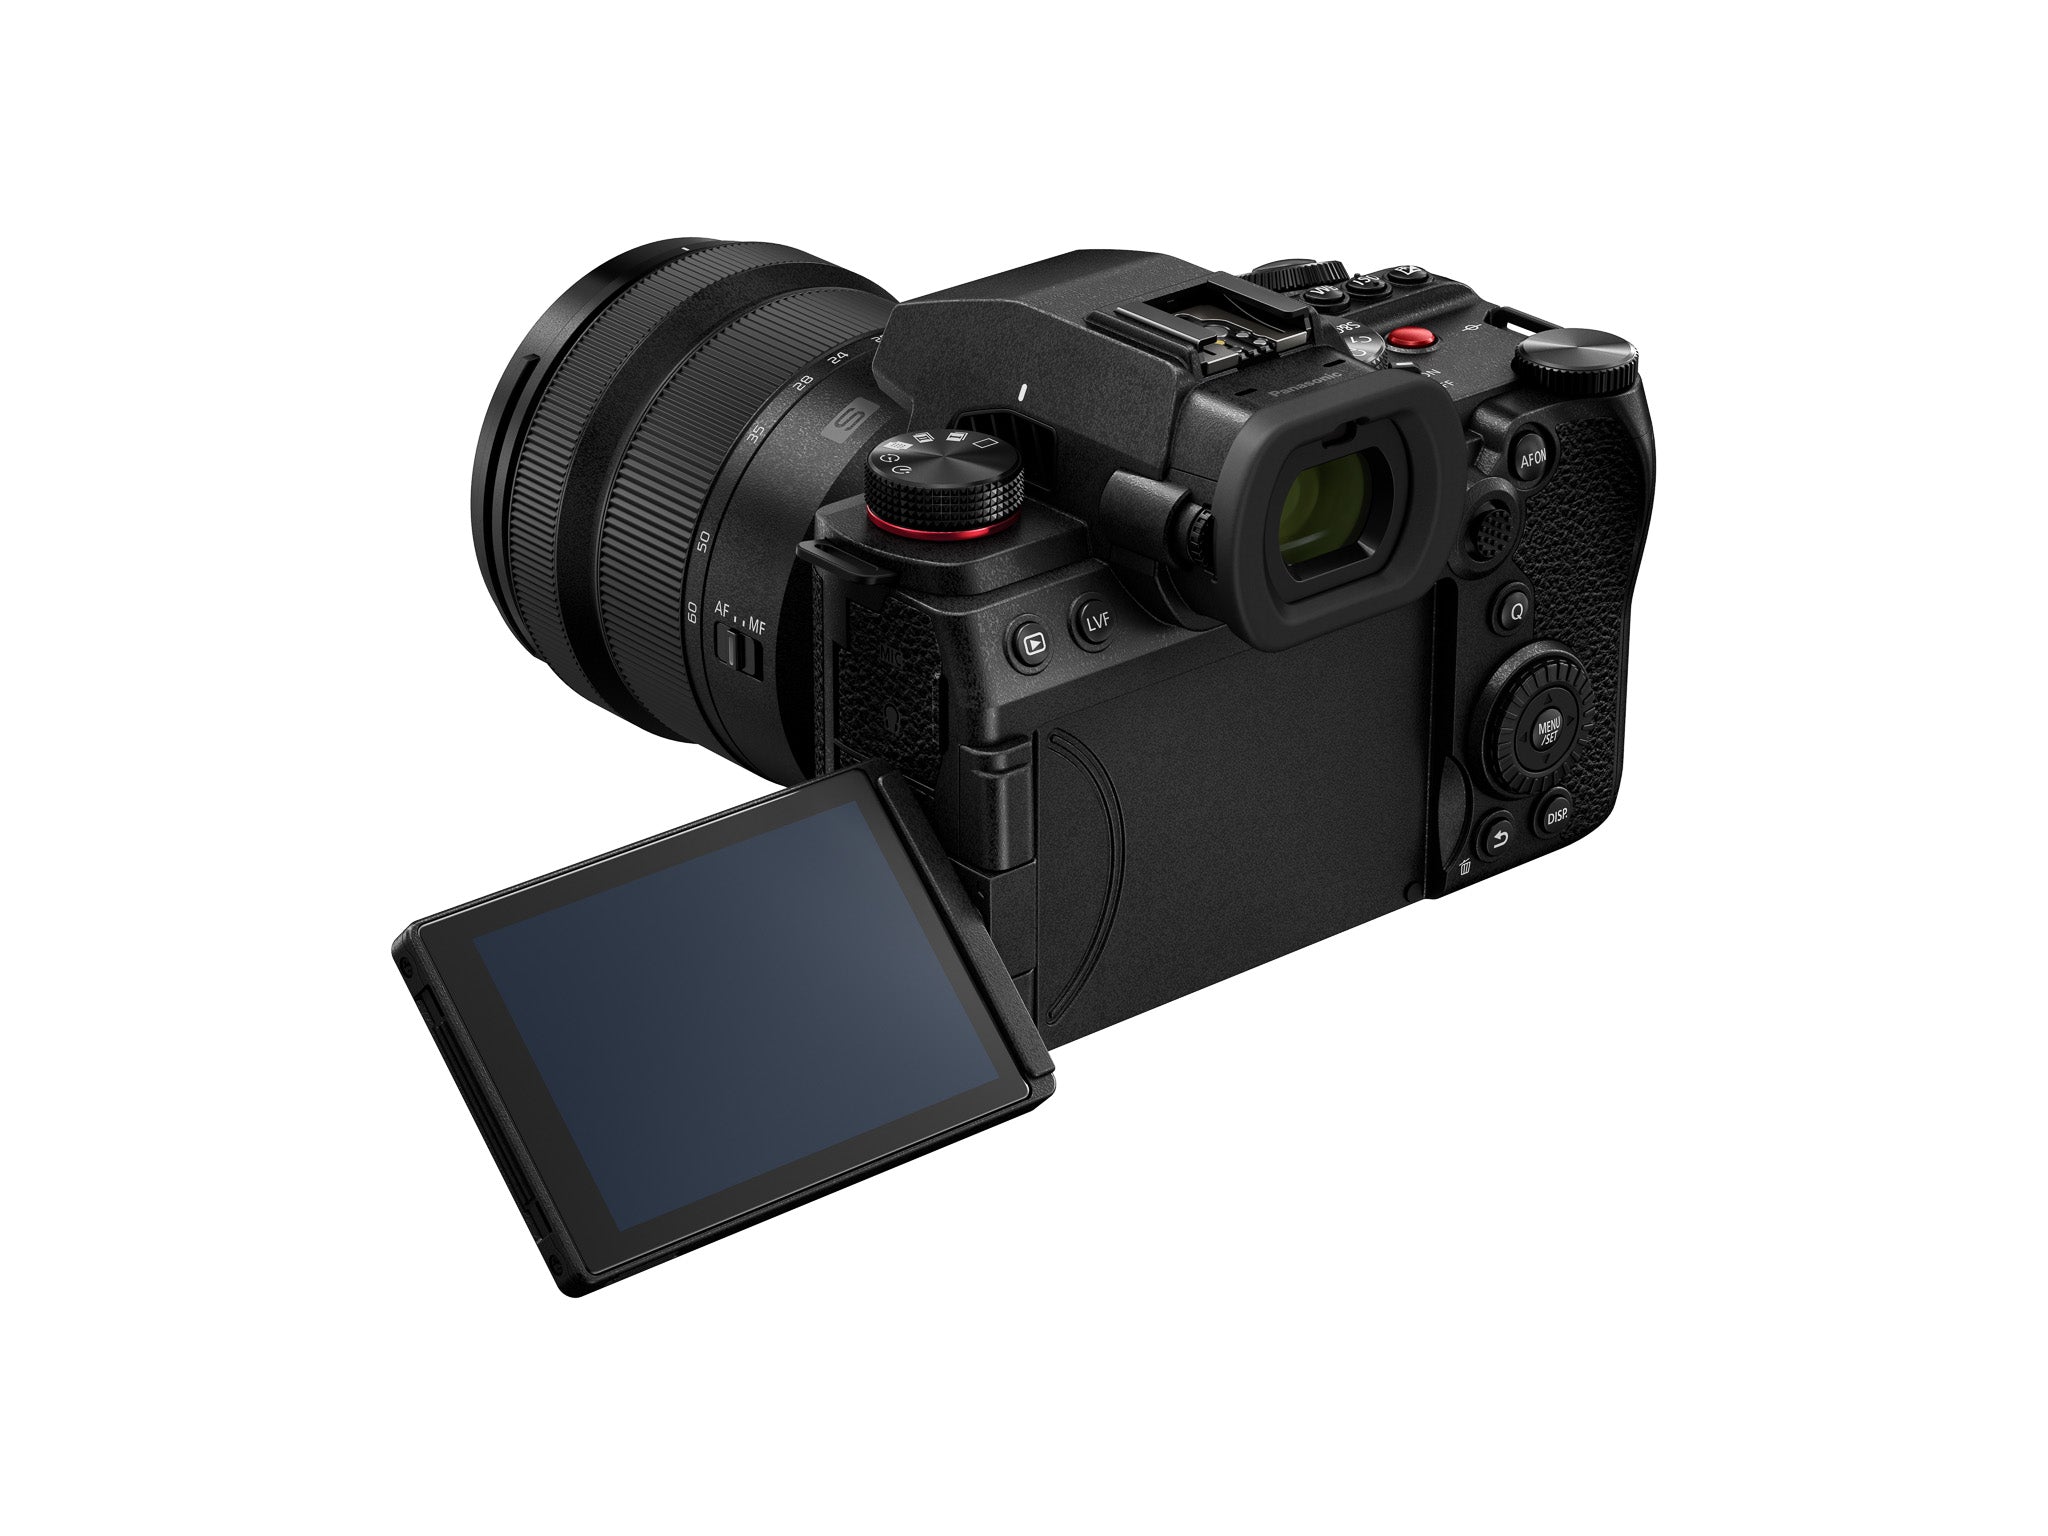 Panasonic Lumix S5II Camera with 20-60mm & 50mm Lens Kit